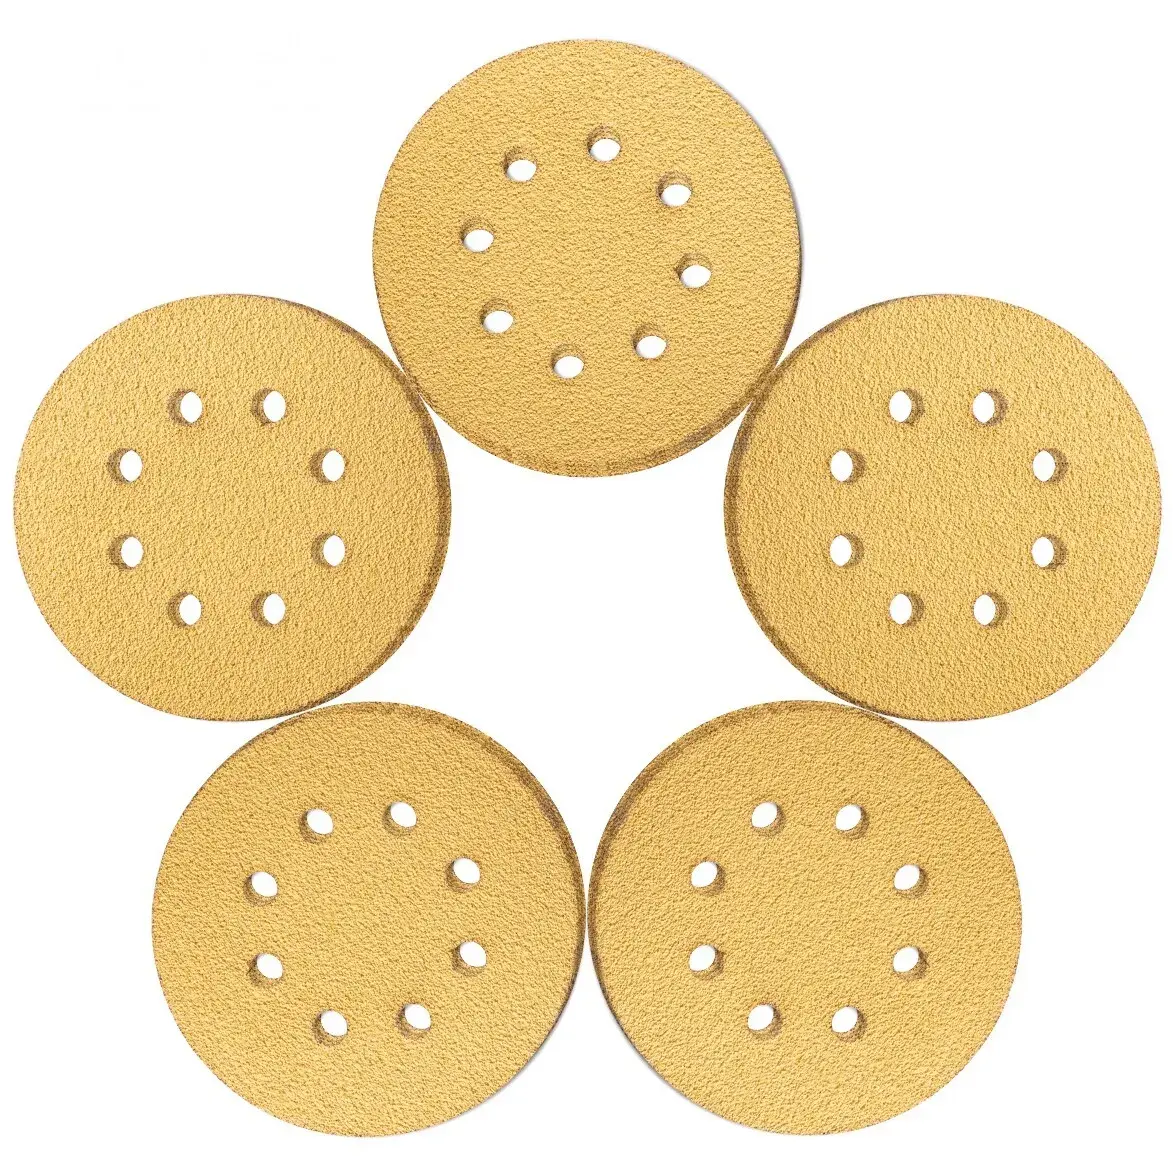 5in 60 80 120 220 320Grit Sanding Discs Abrasive Tools Paper Pad for Orbit m18 Sander